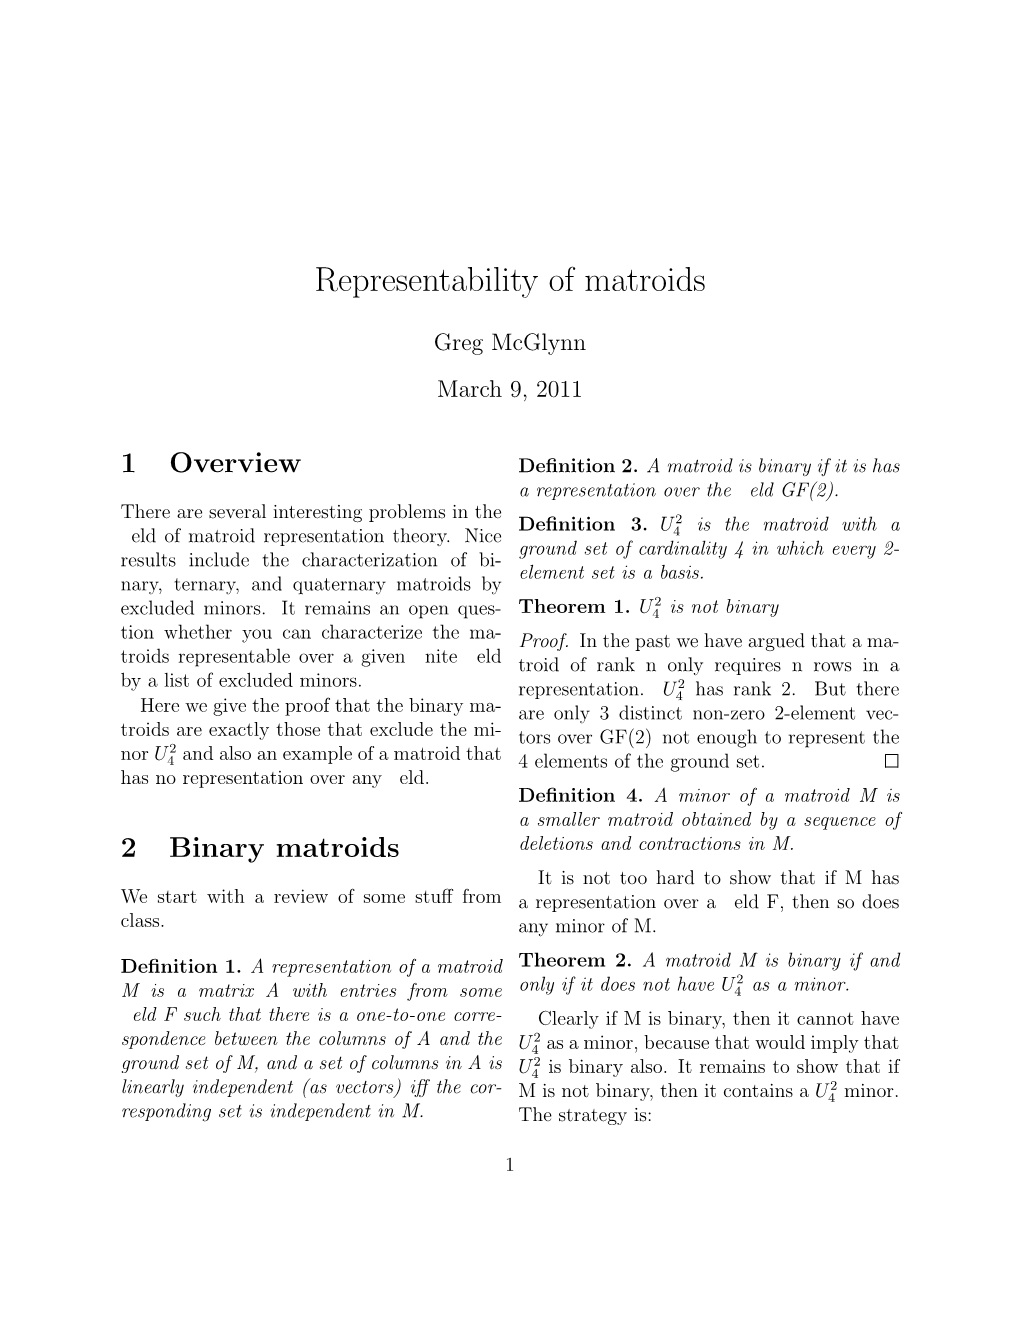 Representability of Matroids